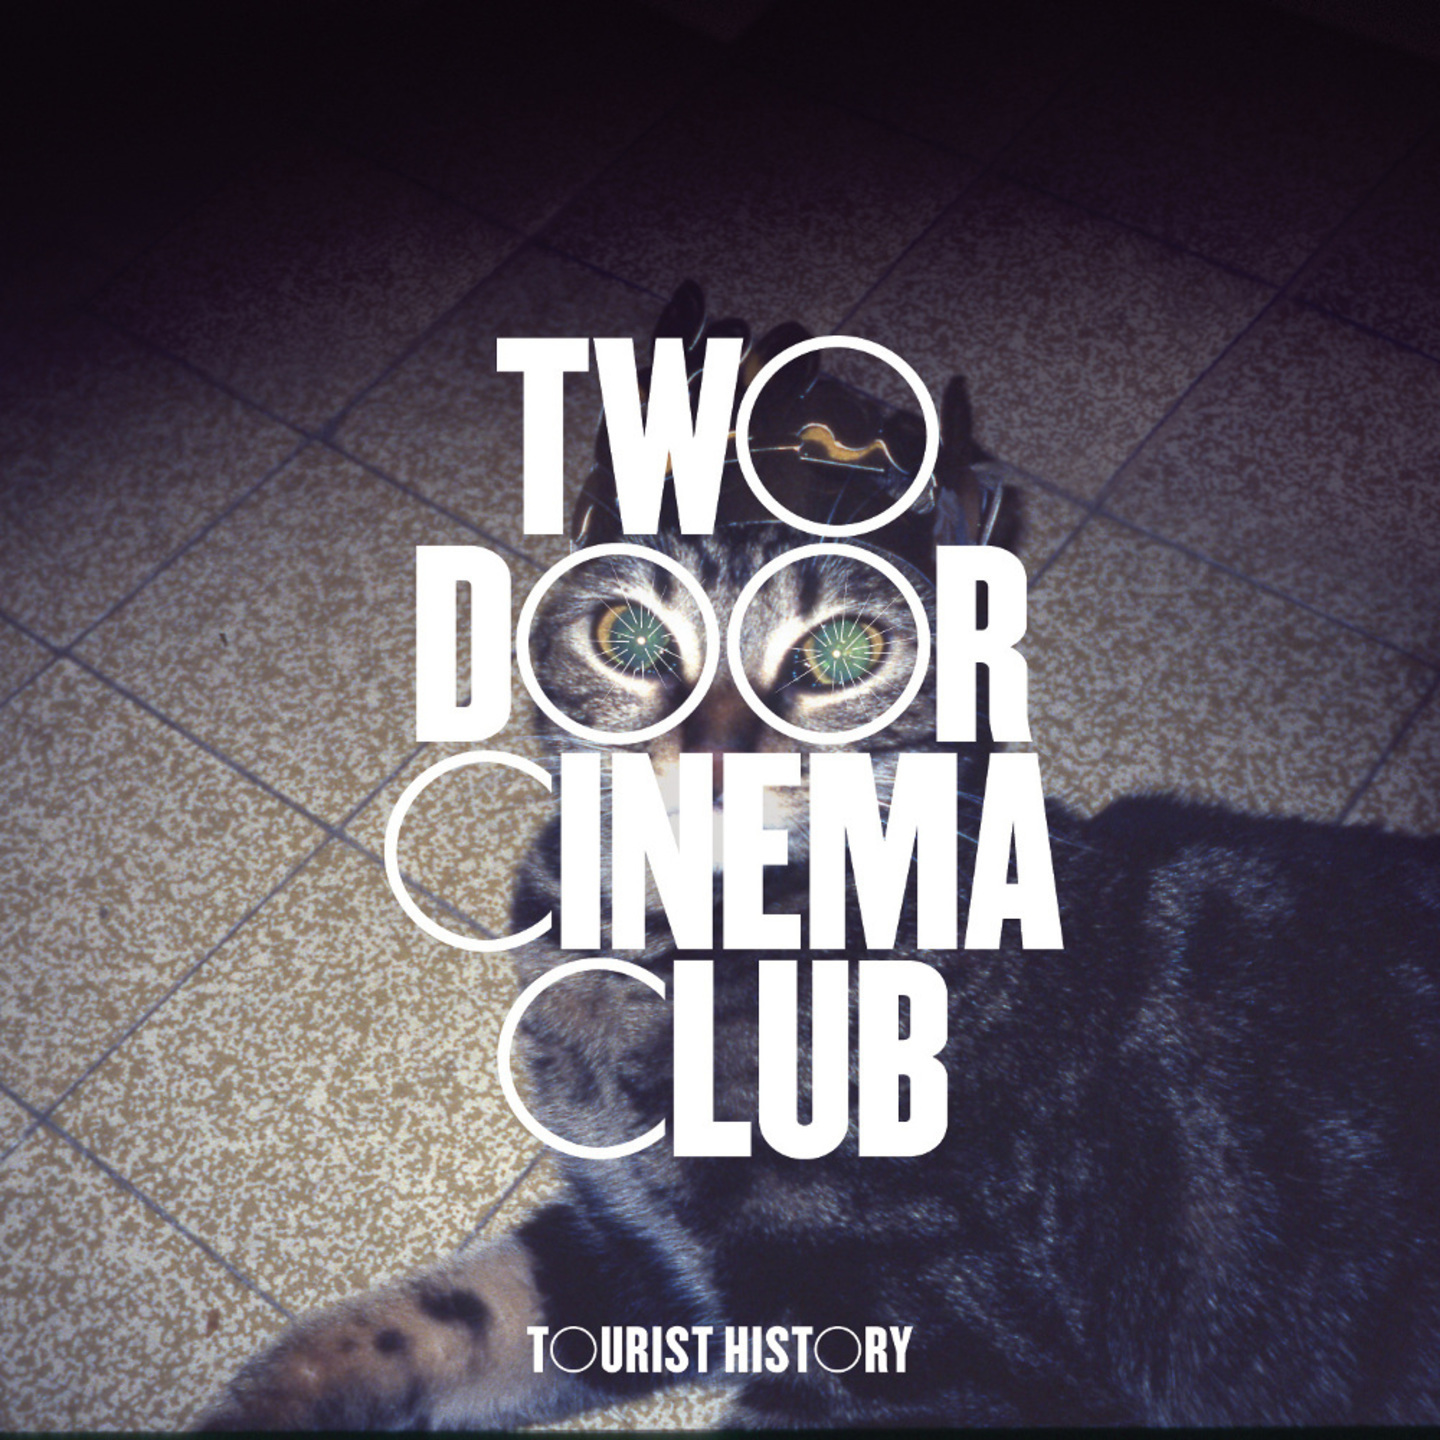 TWO DOOR CINEMA CLUB - Tourist History LP